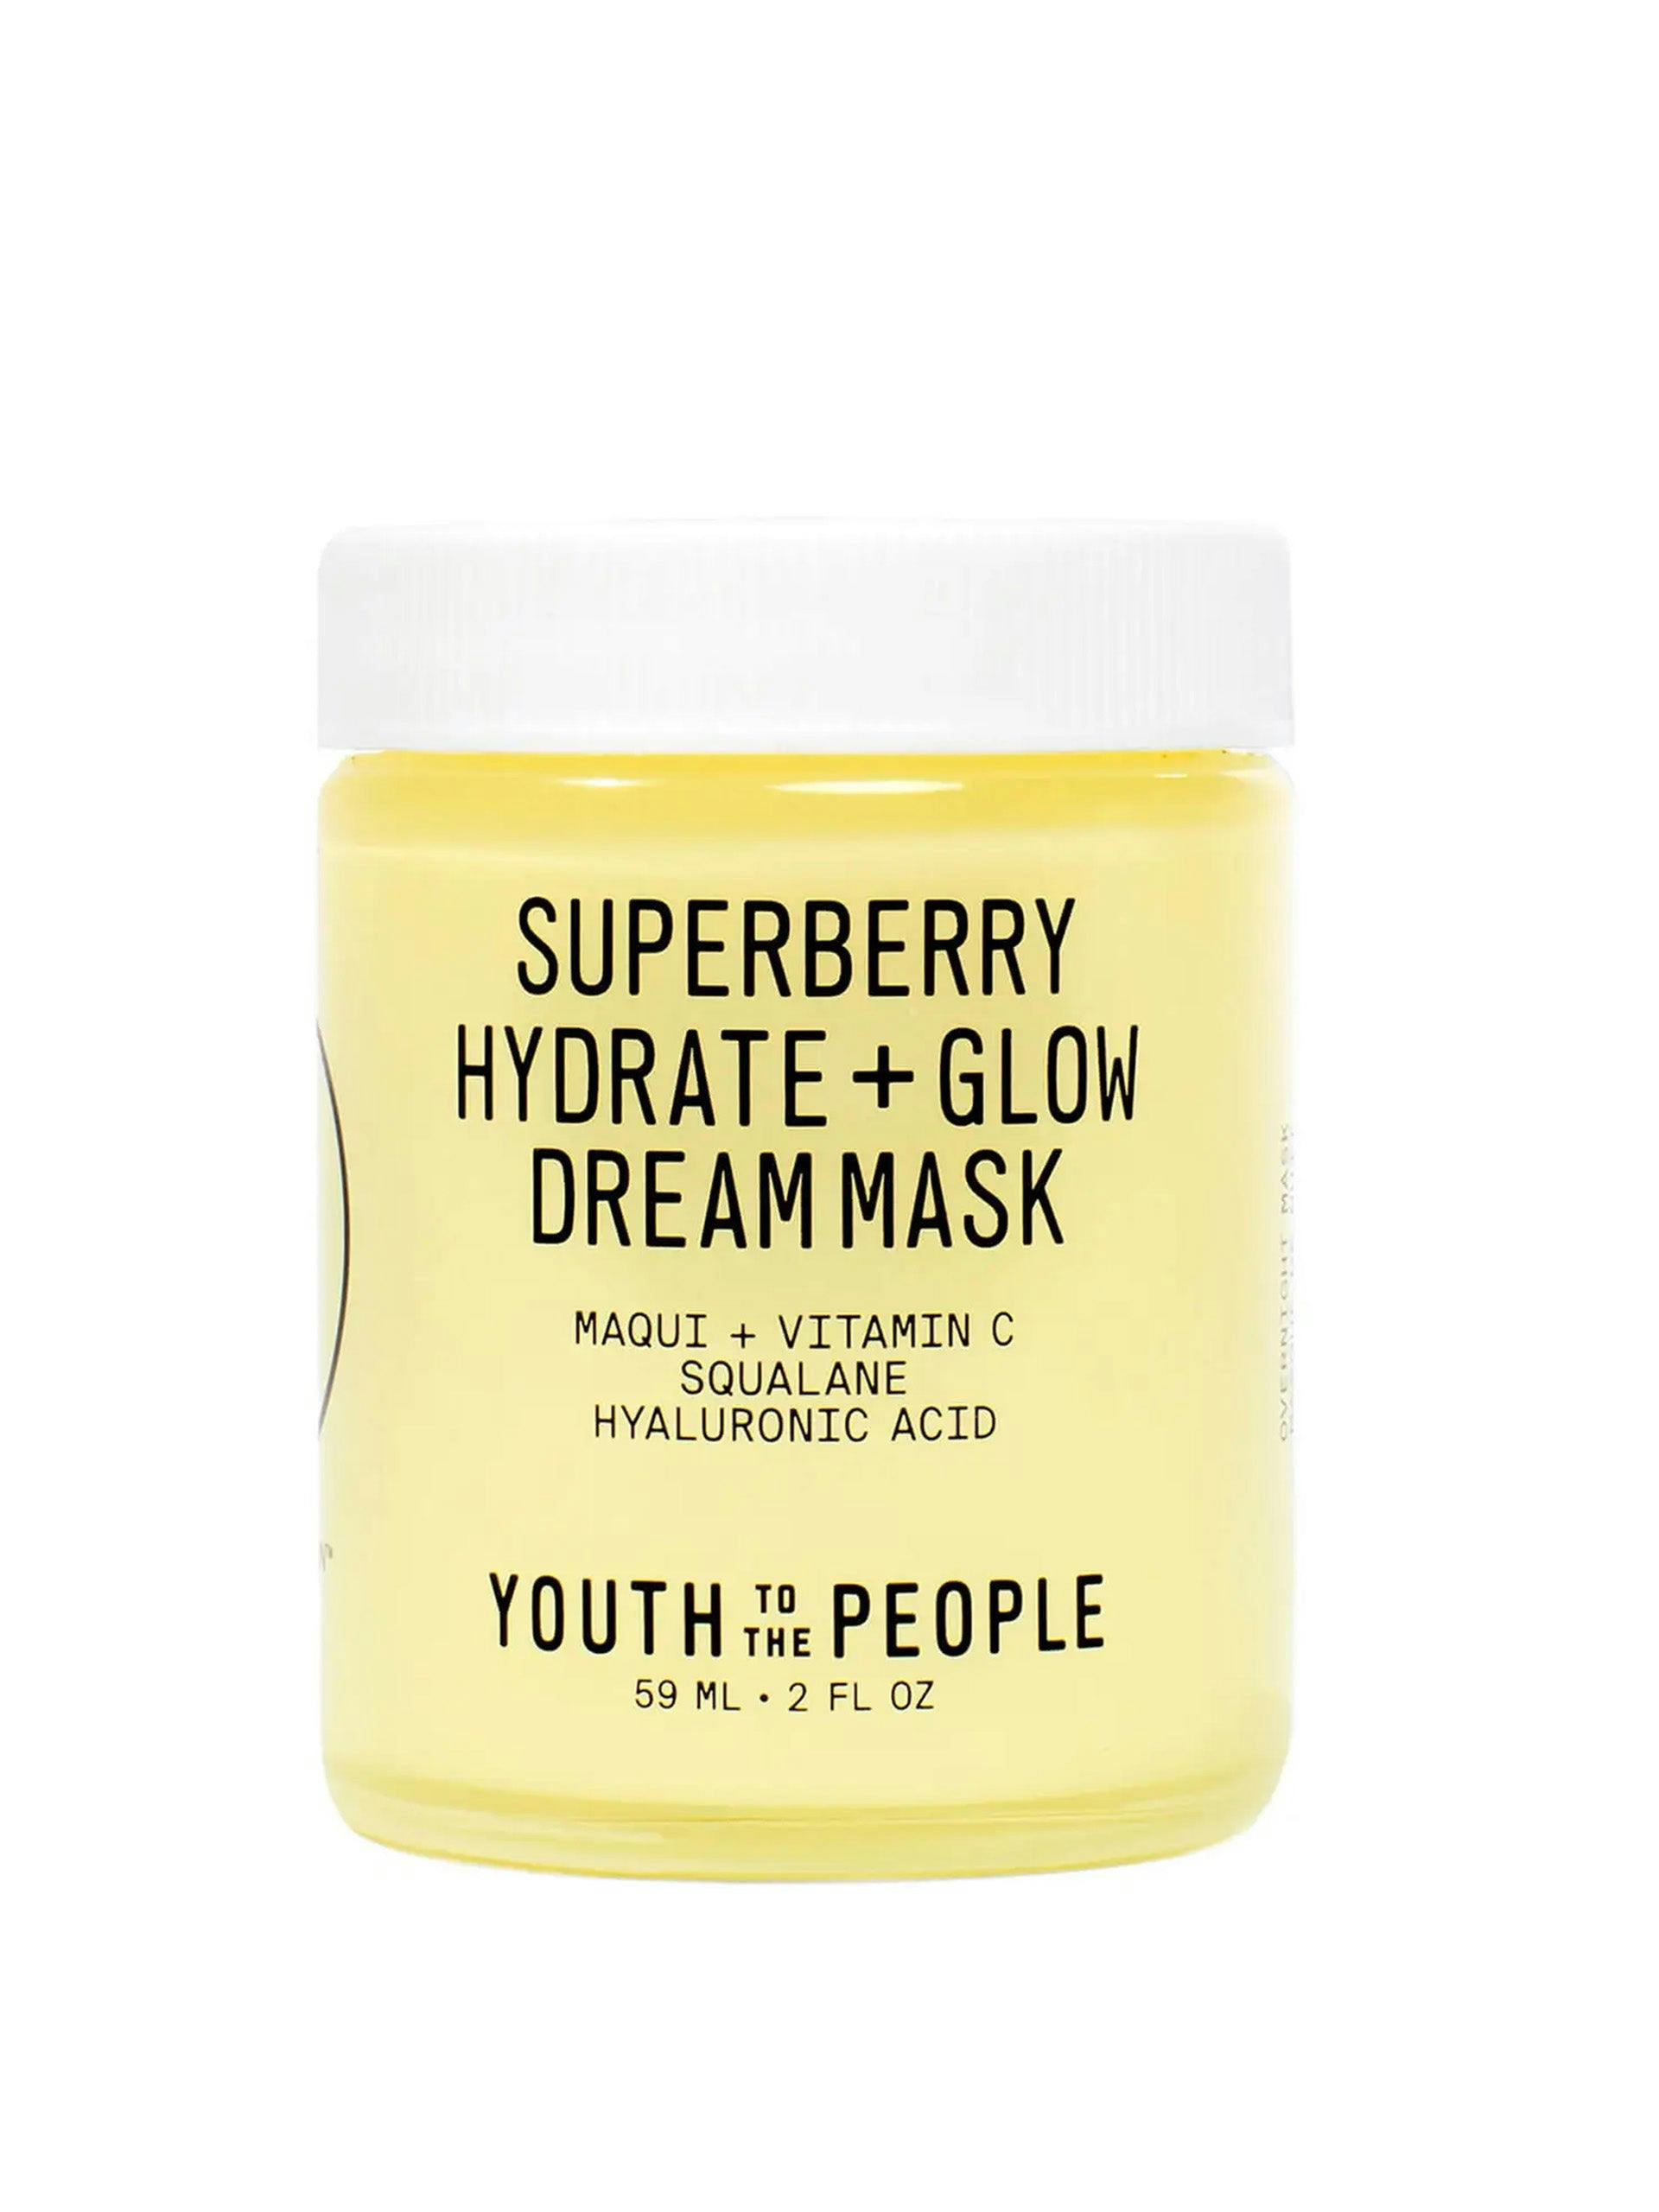 Hydrate + glow dream mask